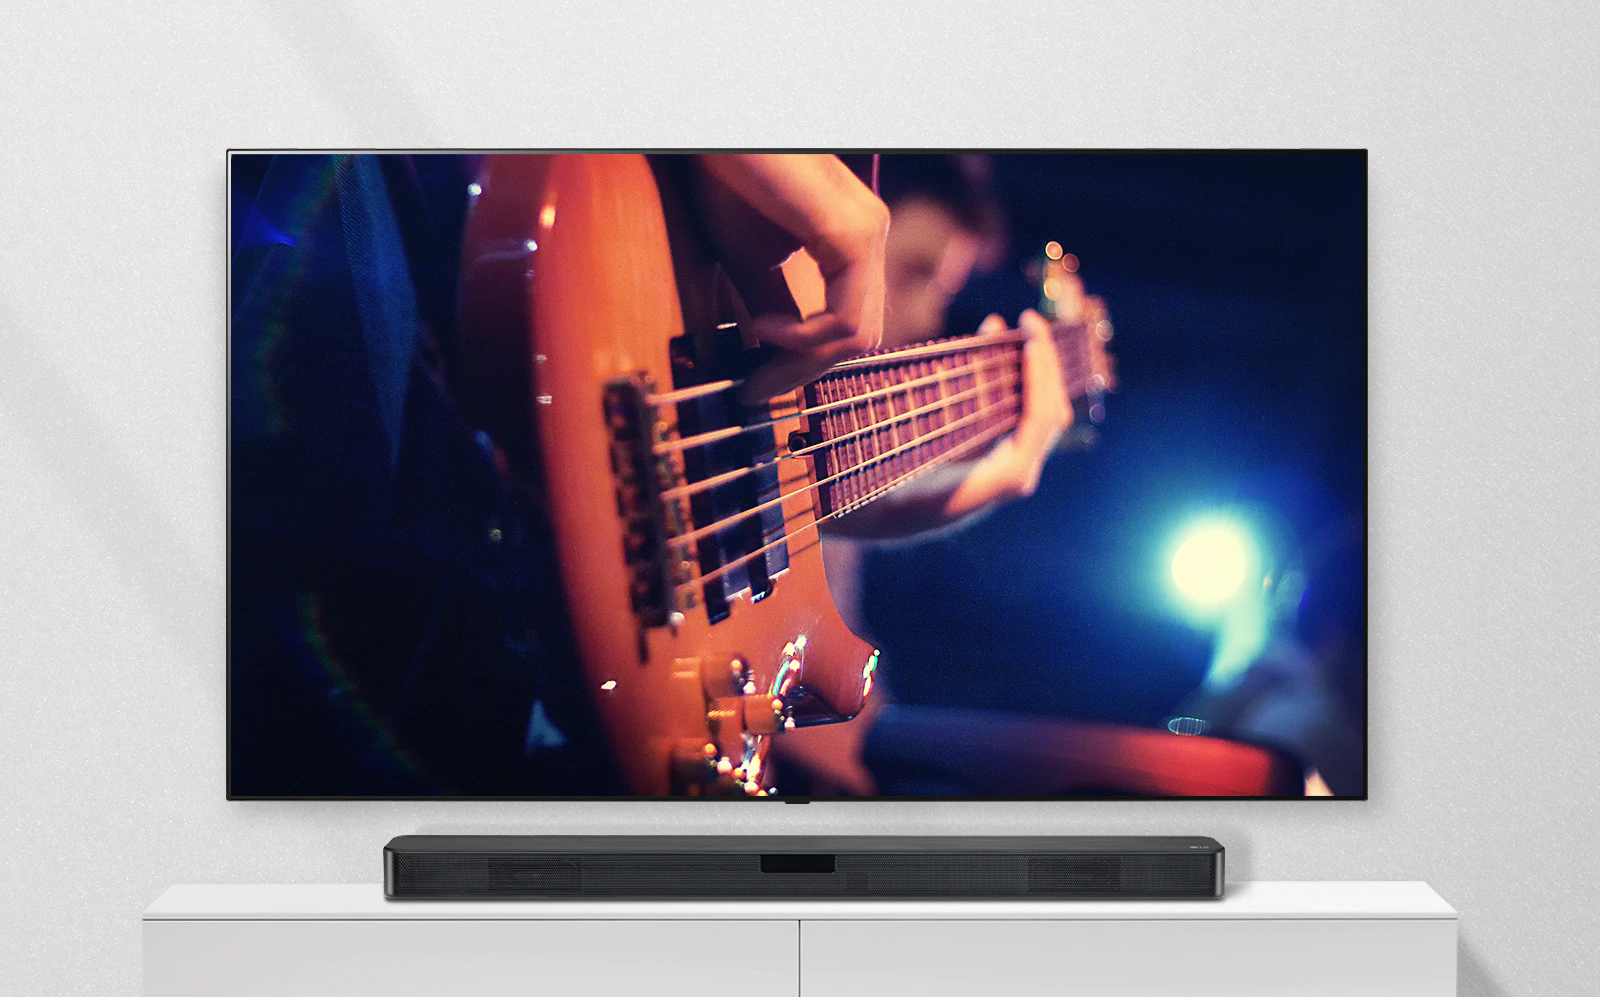 LG Sound Bar 2.1ch, 300W, AI Sound Pro, TV Sound Sync, subwoofer | LG Nepal